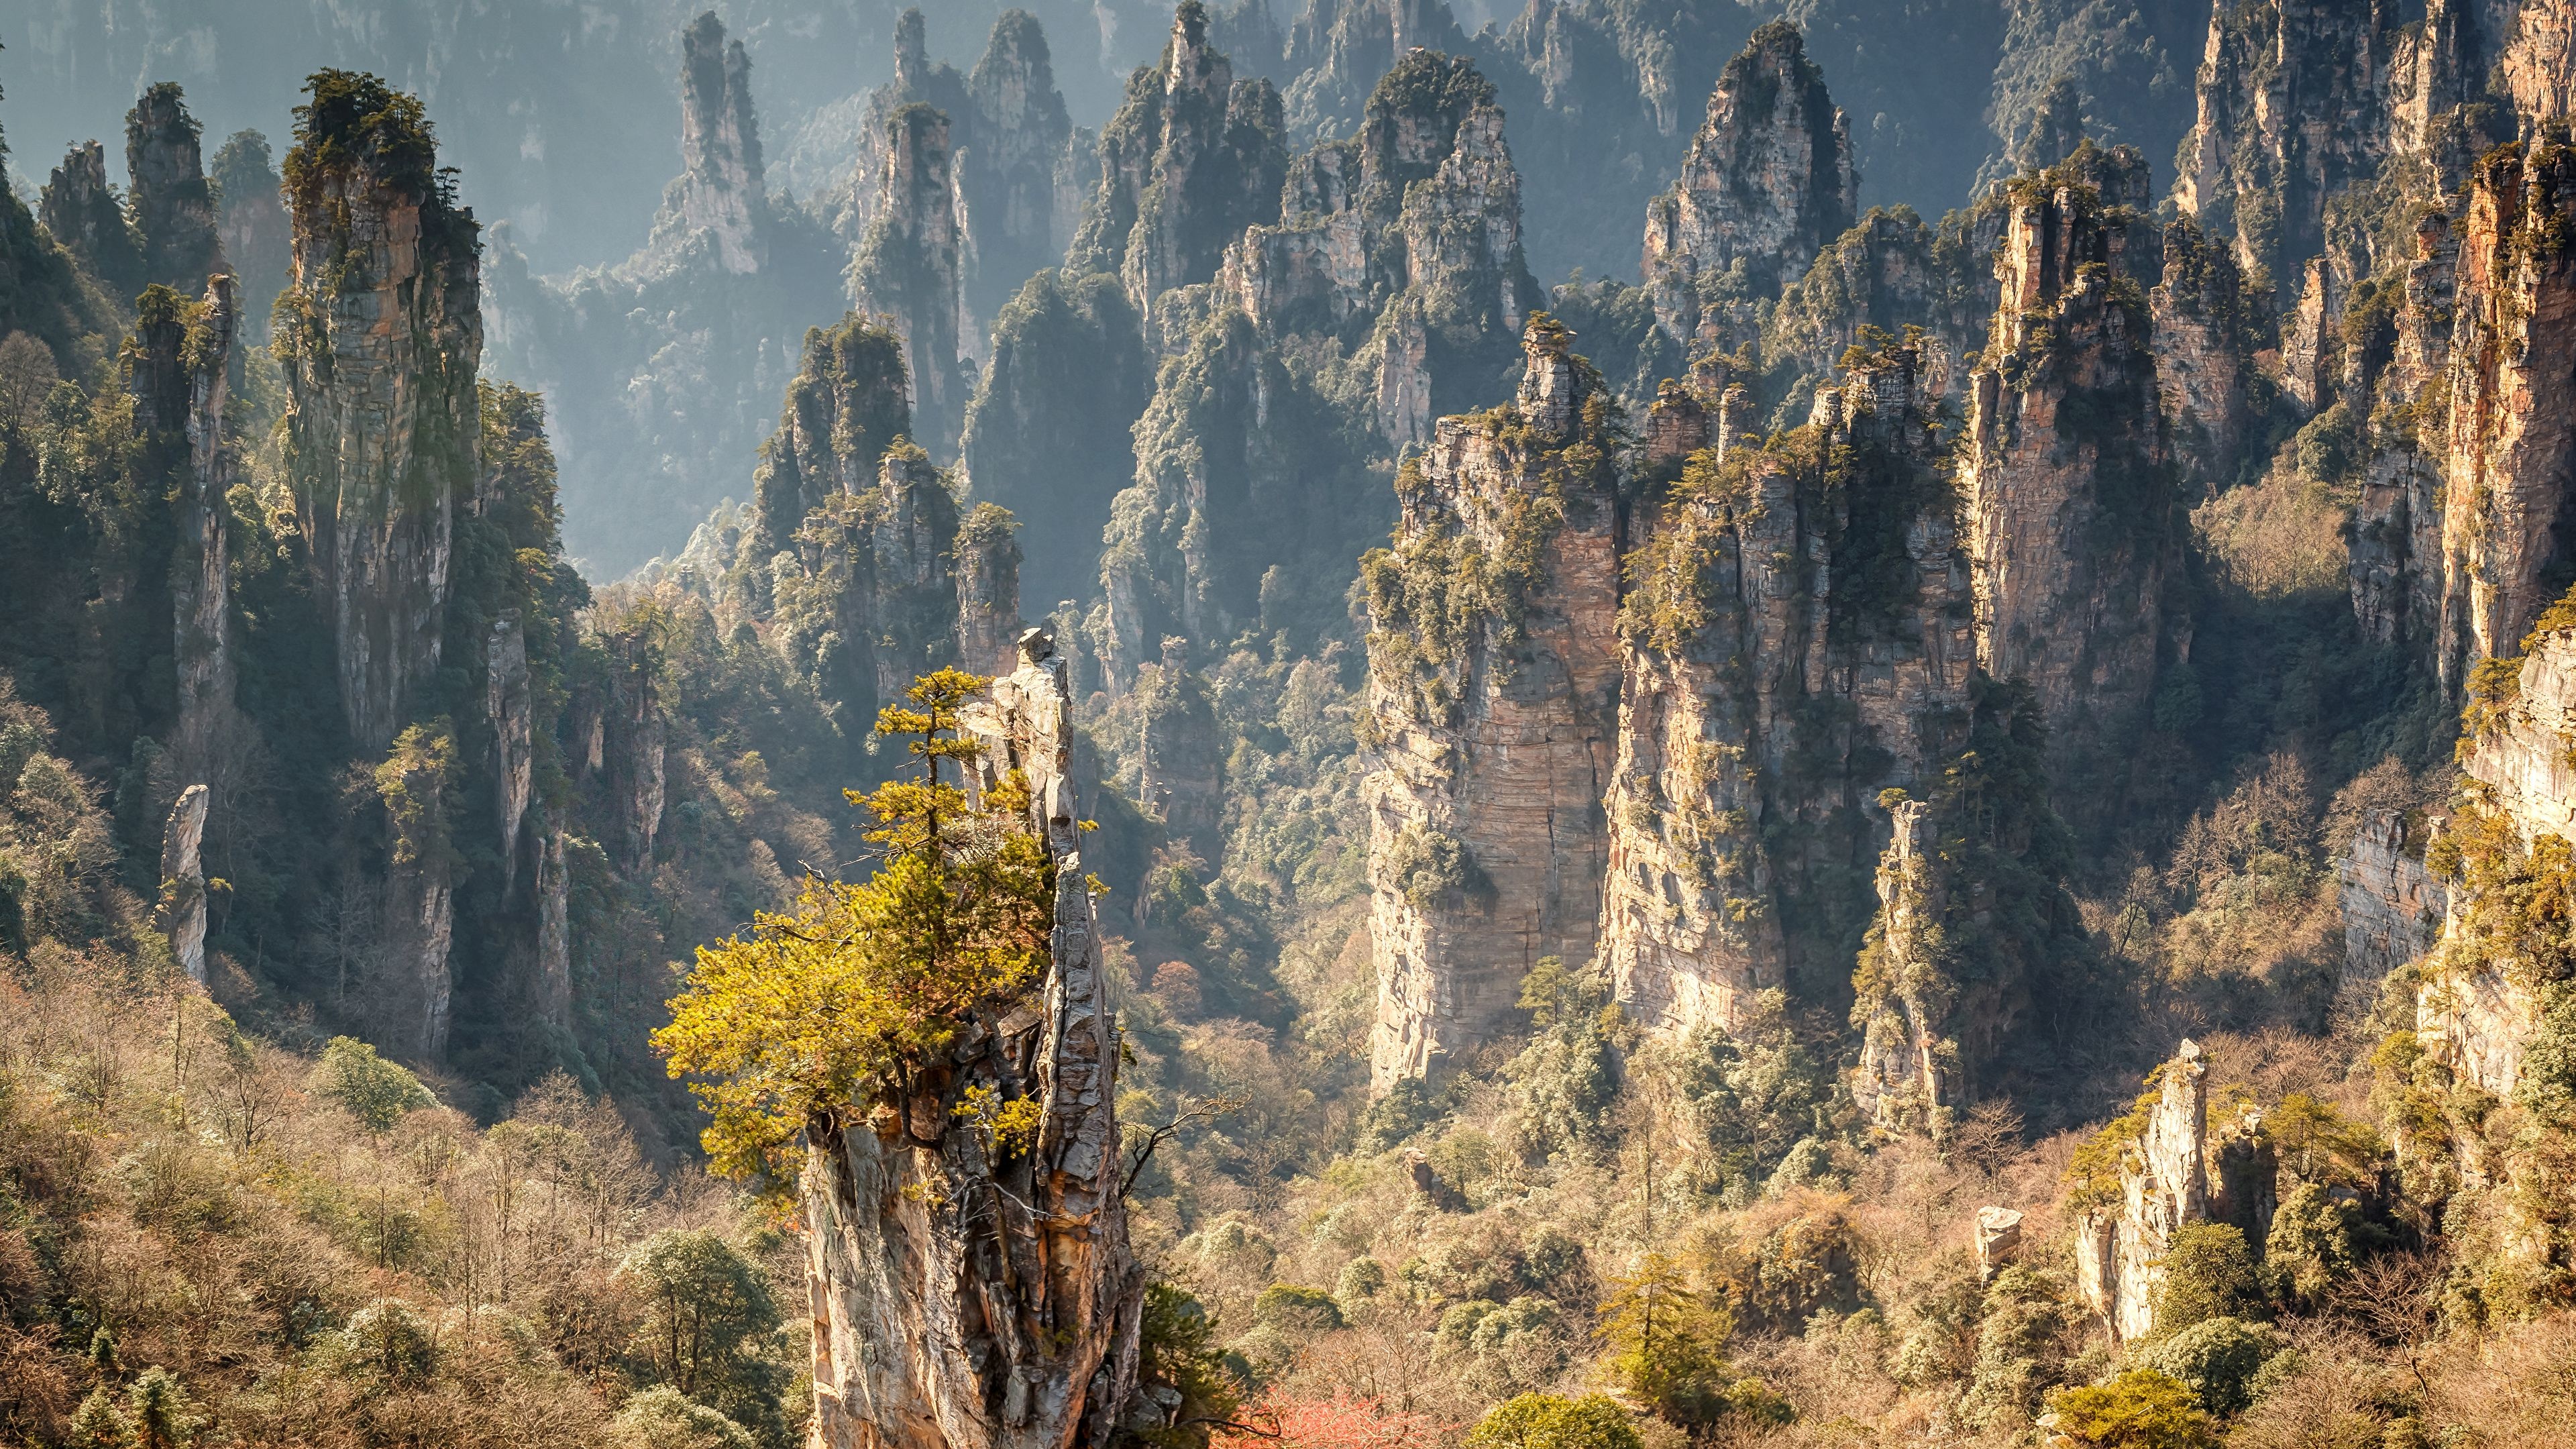 HD wallpaper, Zhangjiajie National Forest Park, Stunning Backgrounds, Desktop 4K Zhangjiajie National Forest Park Background Photo, 3840X2160 4K Desktop, 3840 X 2160 Forest Wallpapers